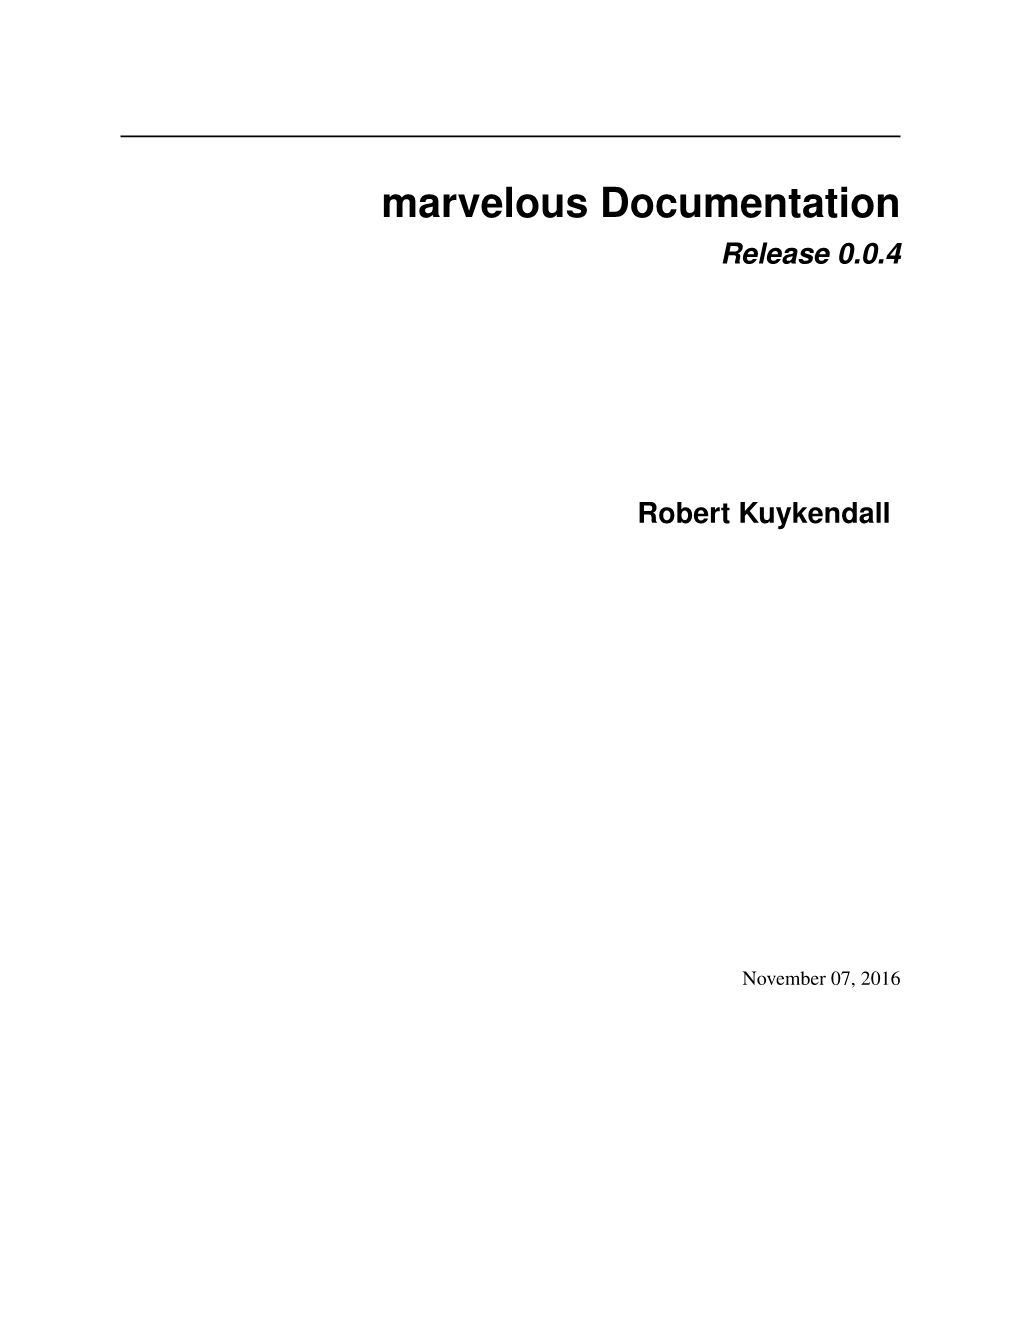 Marvelous Documentation Release 0.0.4 Robert Kuykendall